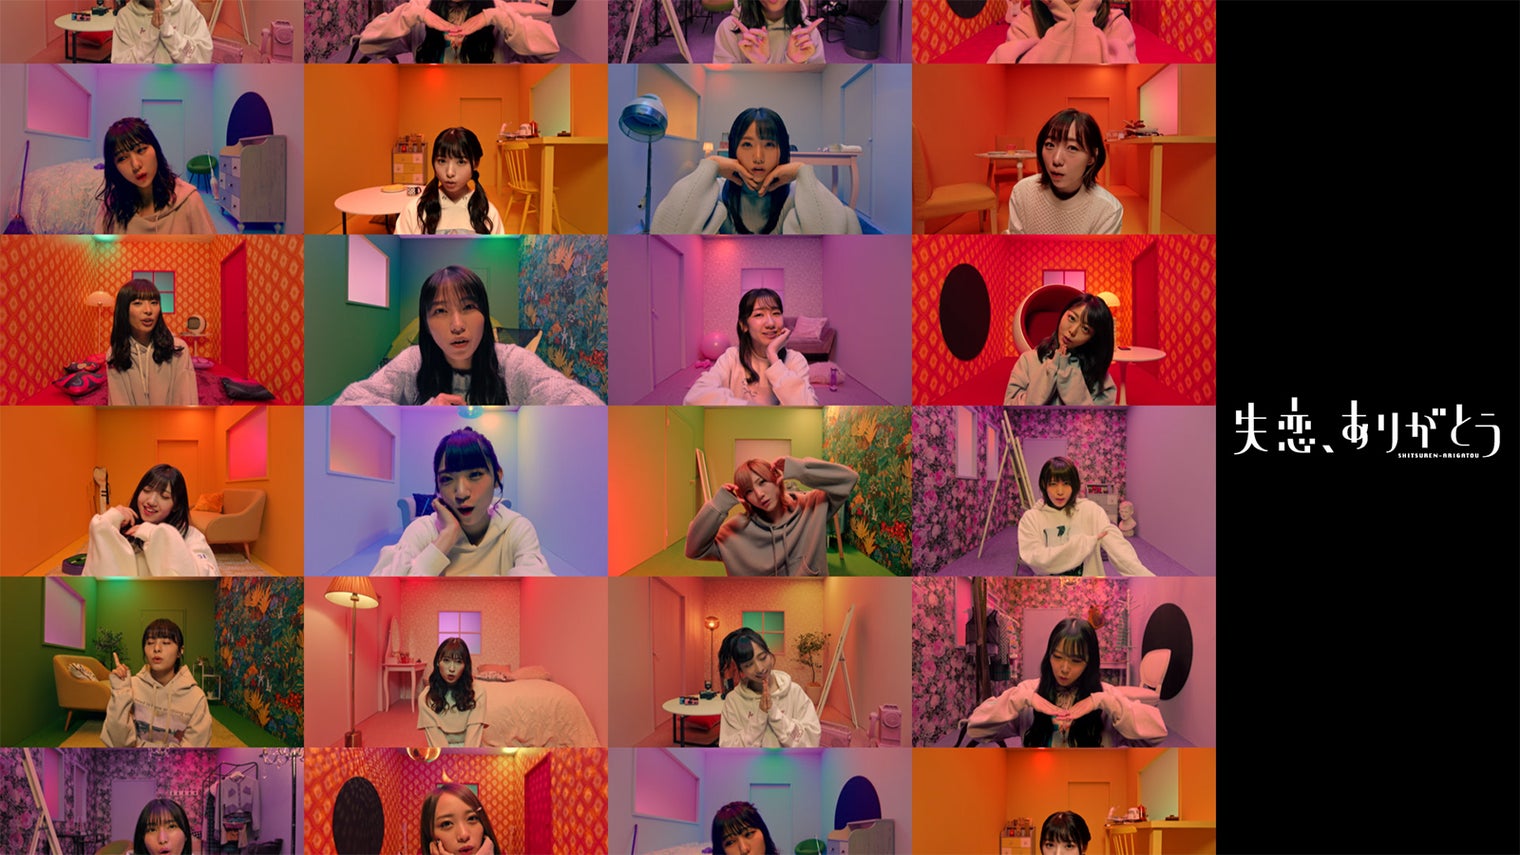 AKB48「失恋、ありがとう」MV解禁 “多視点”で選抜メンバー18人が主役に